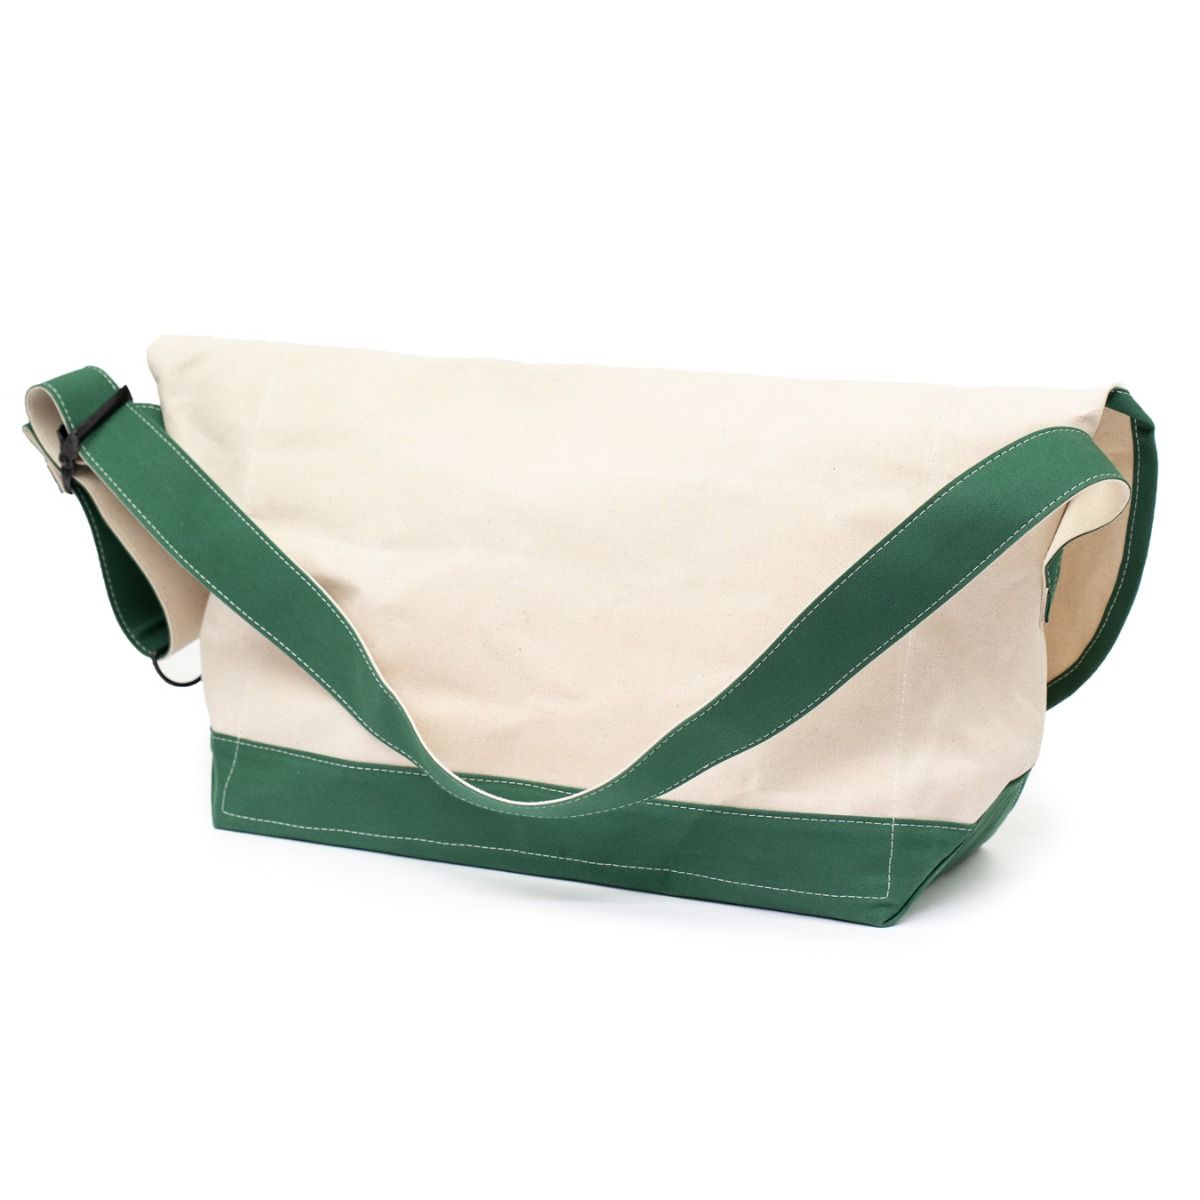 THE INCONVENIENCE STORE×BLUE LUG Messenger Bag - Green